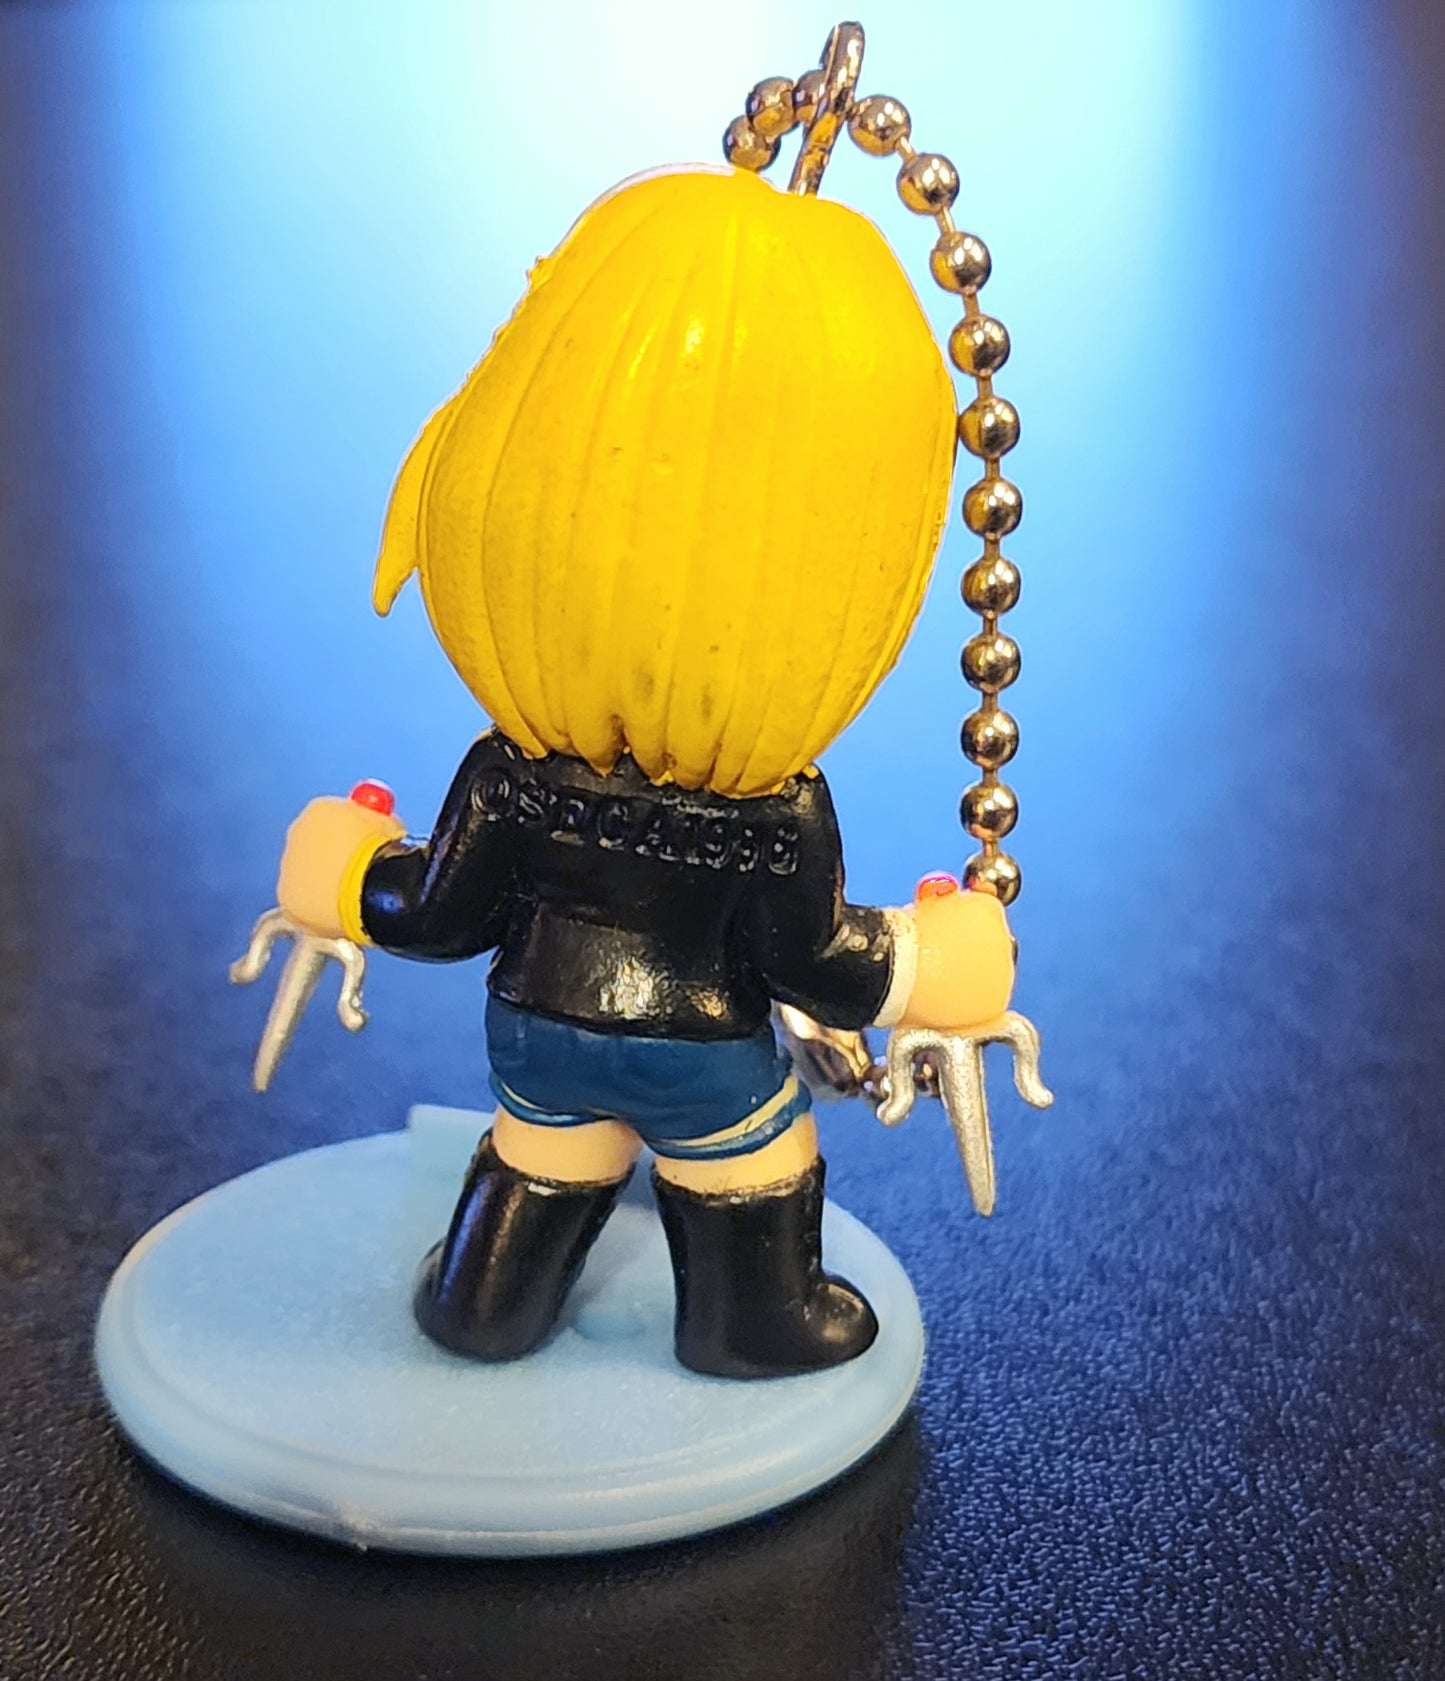 Nagi Hojo Last Bronx Sega Gals Collection Keychain Figure